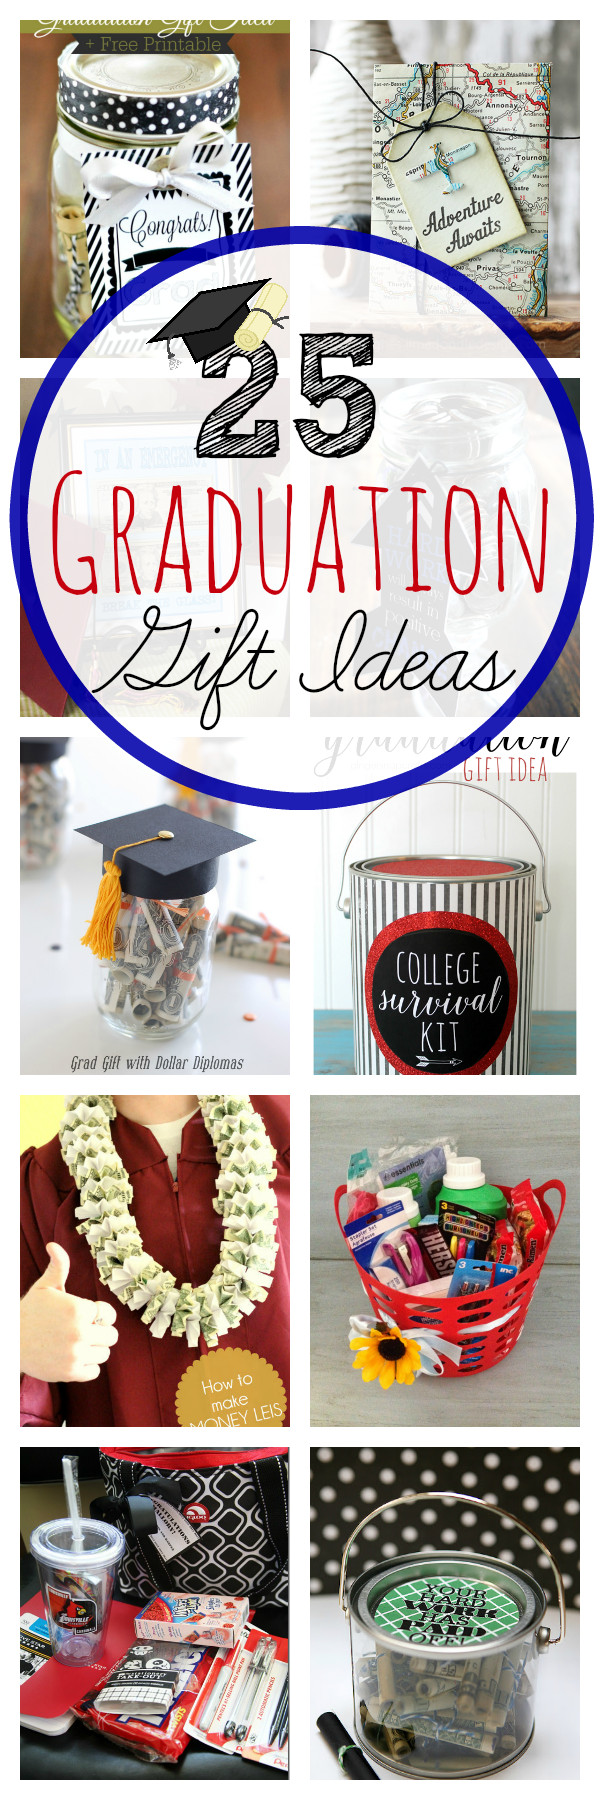 Middle School Graduation Gift Ideas
 25 Graduation Gift Ideas